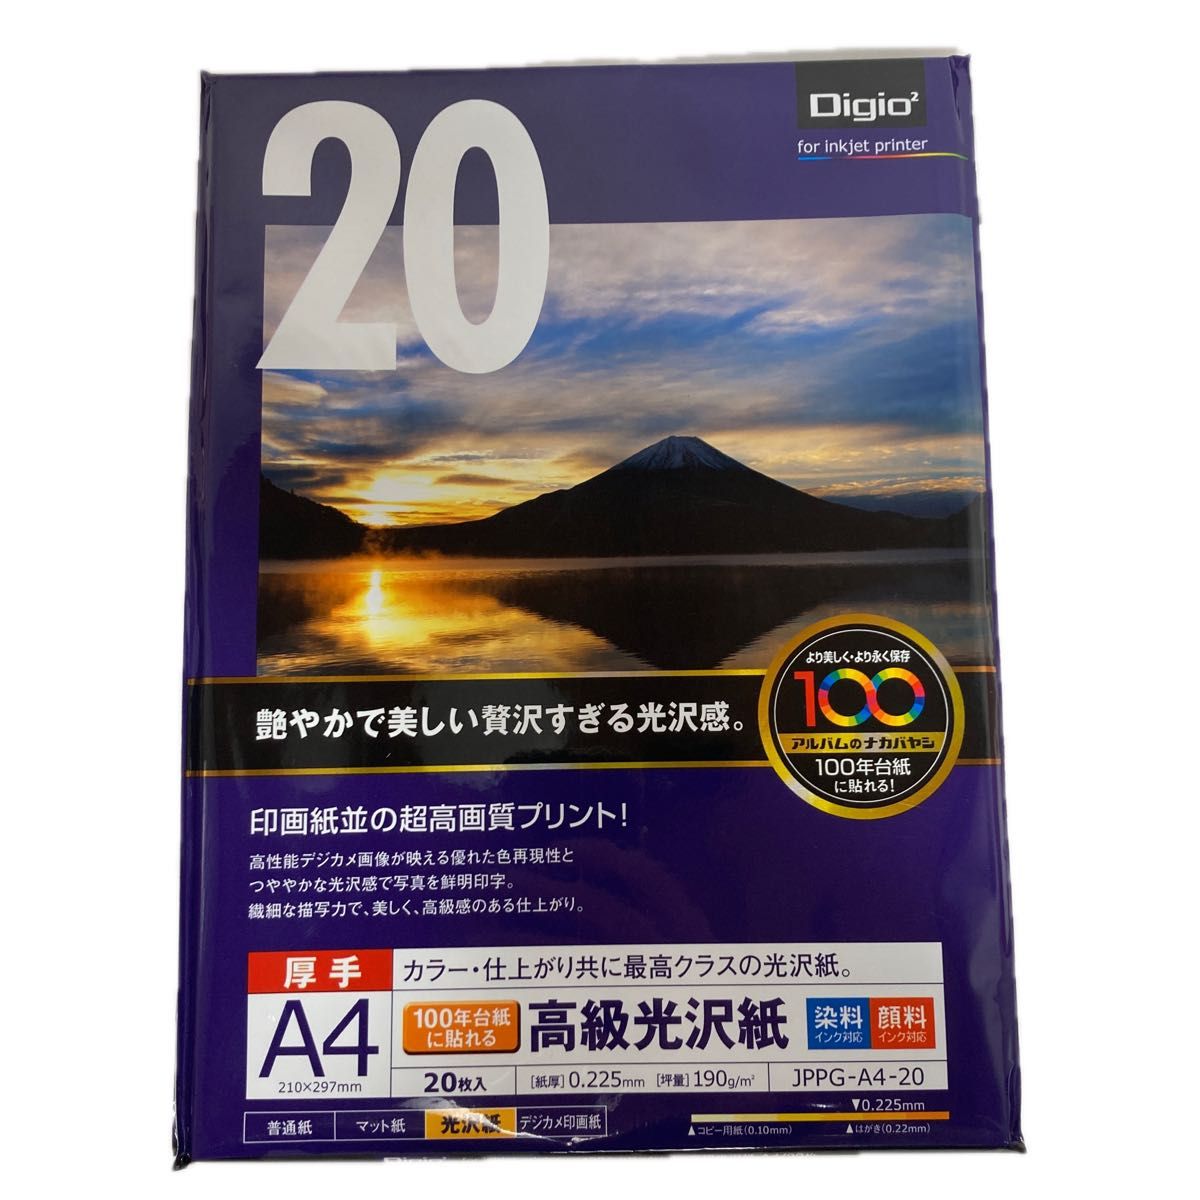 新品ナカバヤシ 写真用紙 高級光沢紙 光沢 厚手 A4判 20枚 JPPG-A4-20